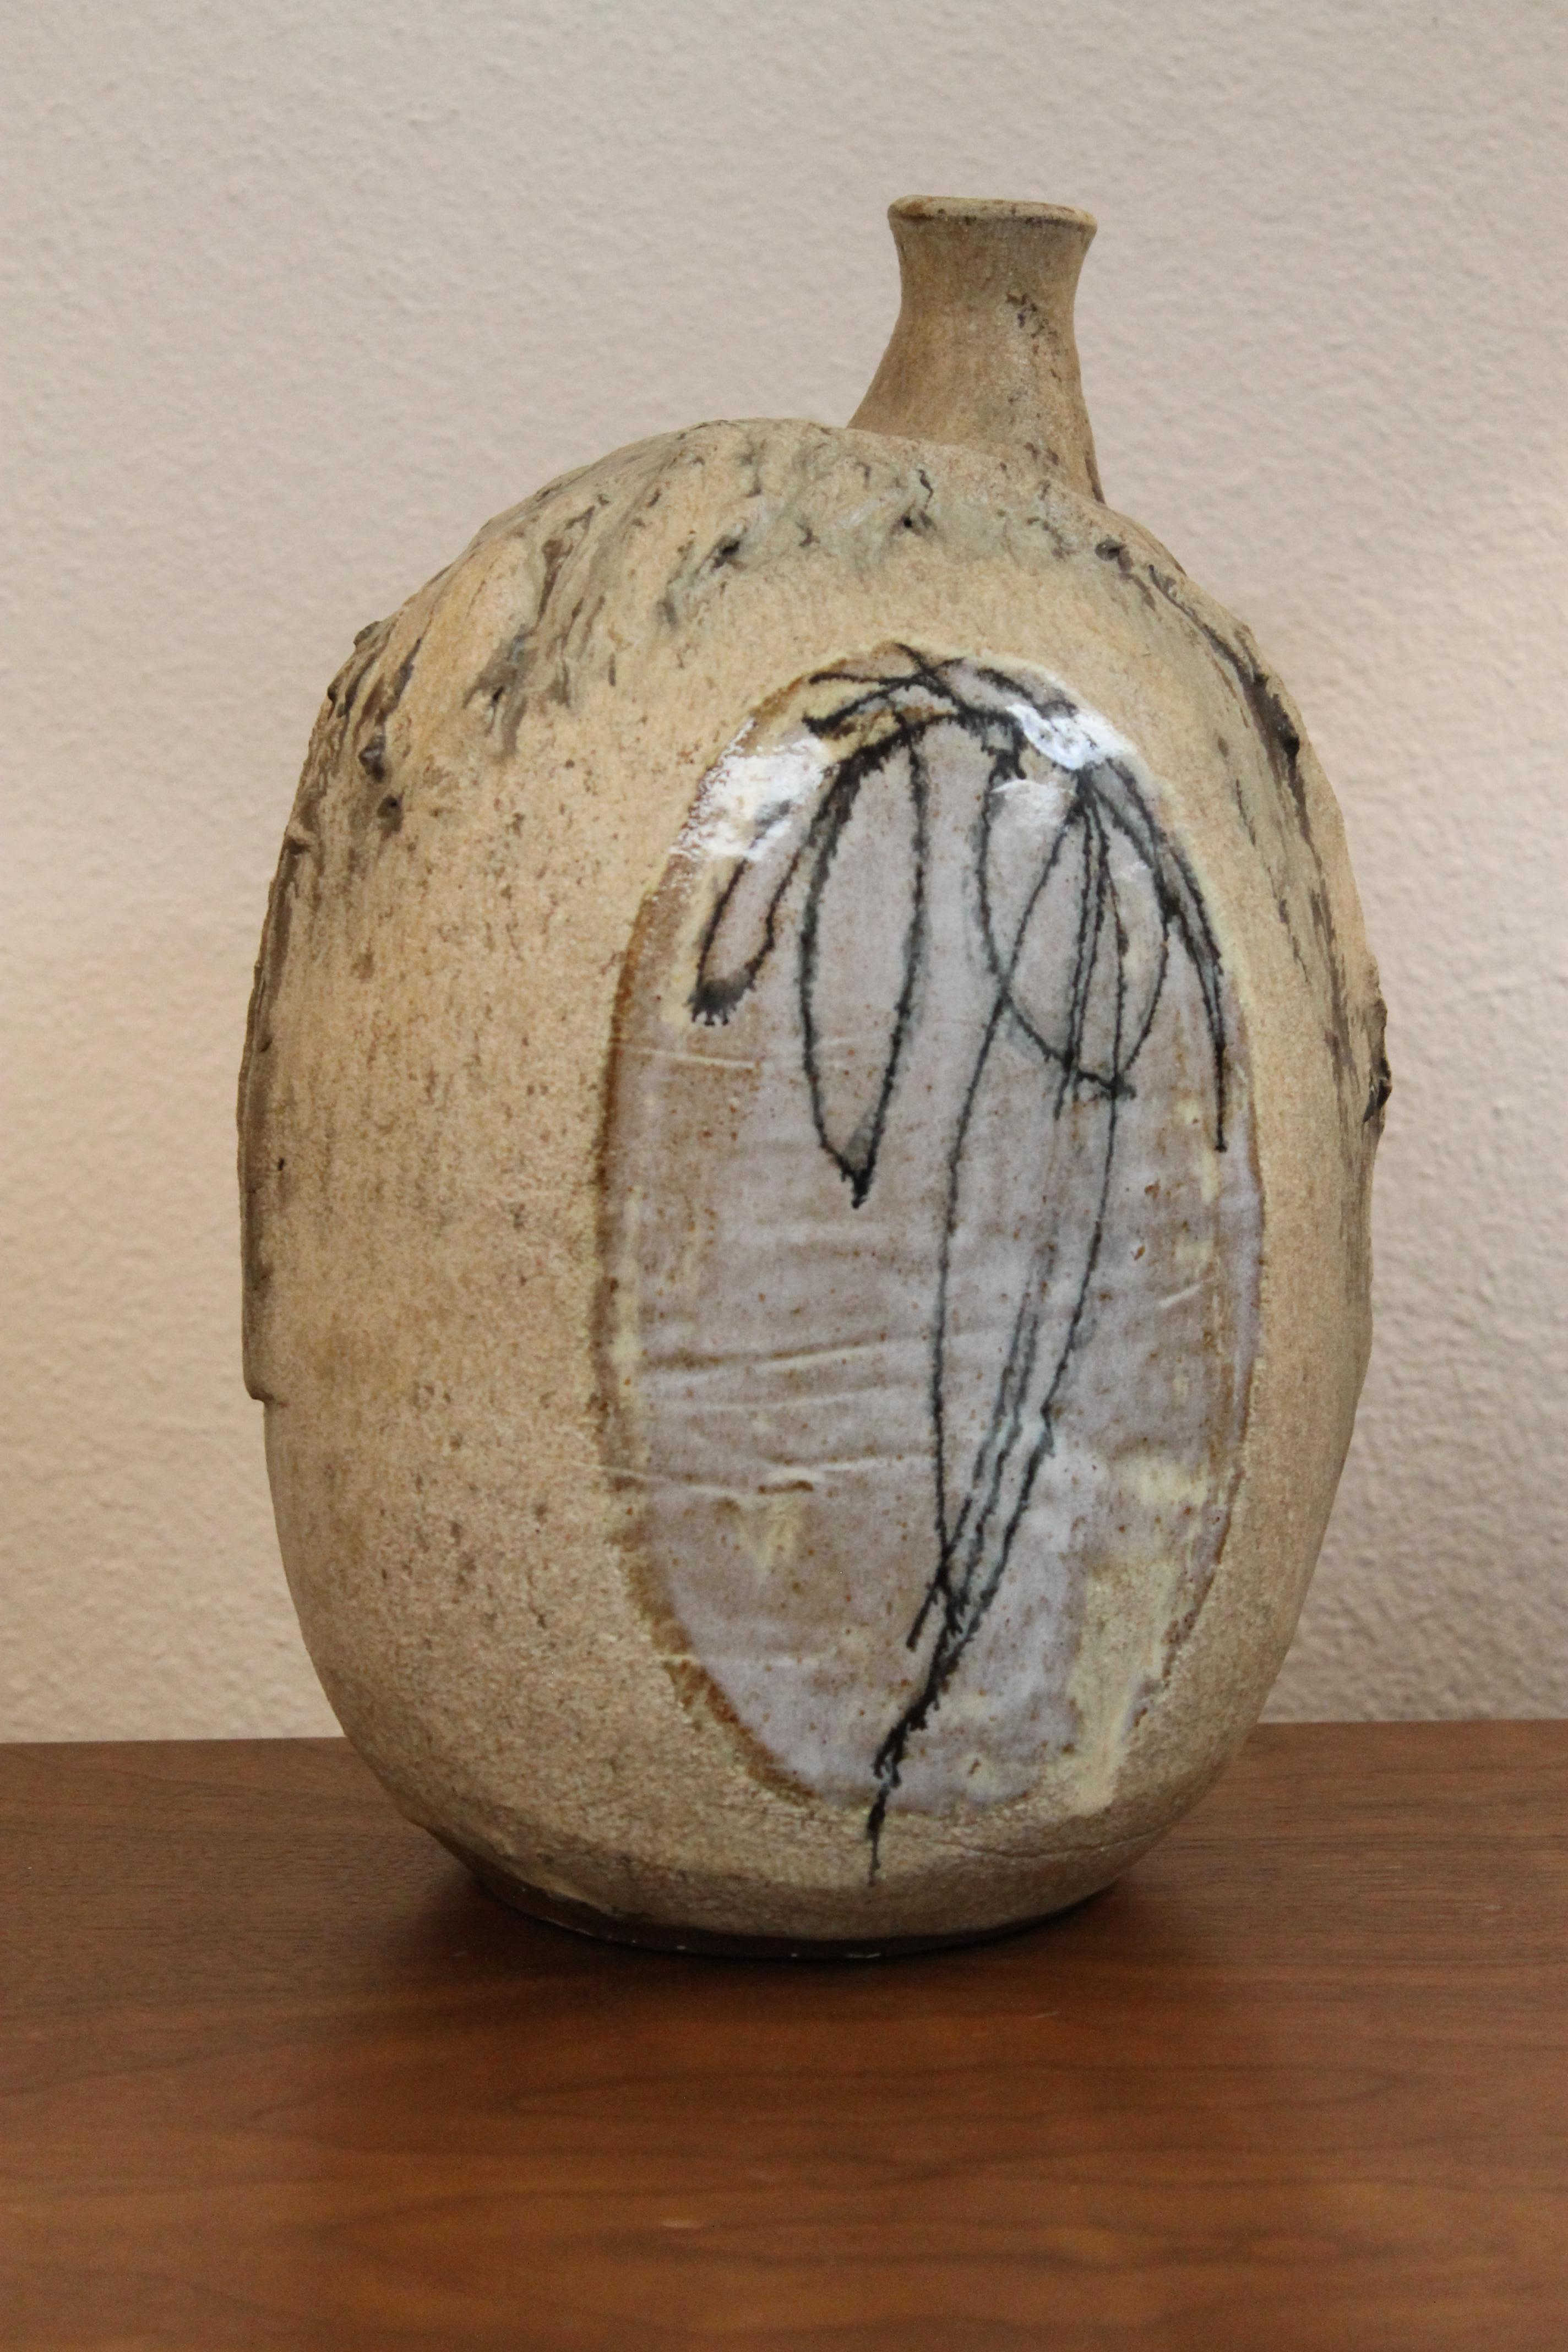 Ceramic vase signed Segal and dated 1965. Vase measures 8.5